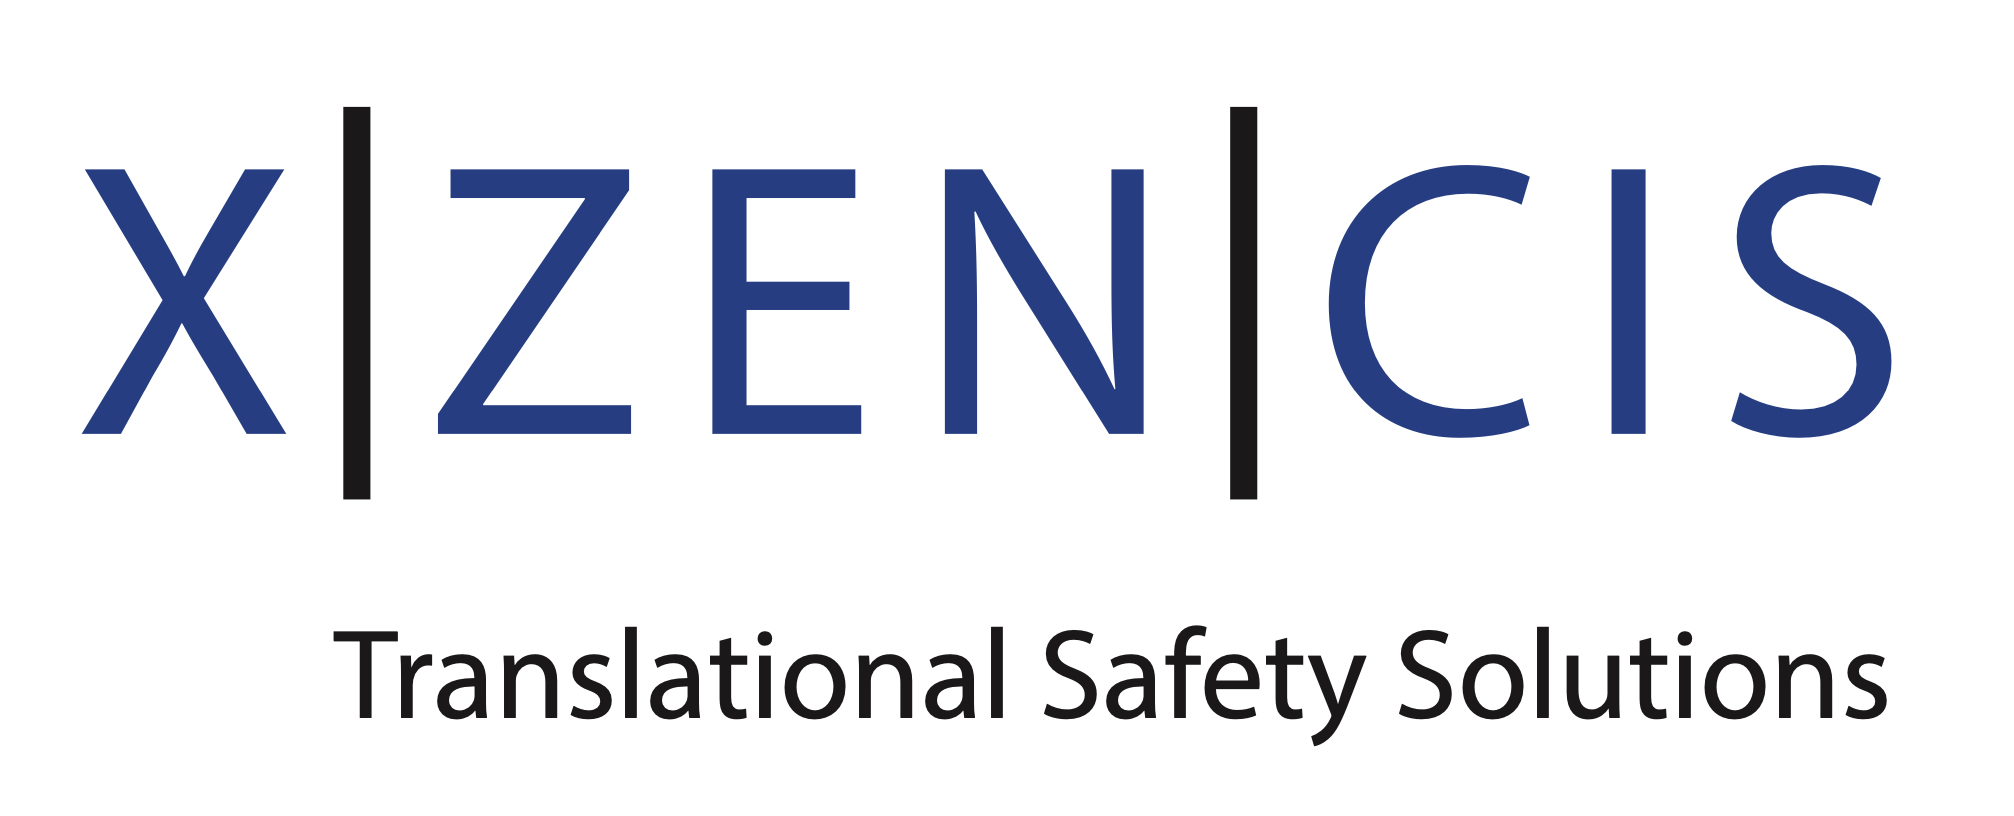 The Xzencis approach to Translational Safety